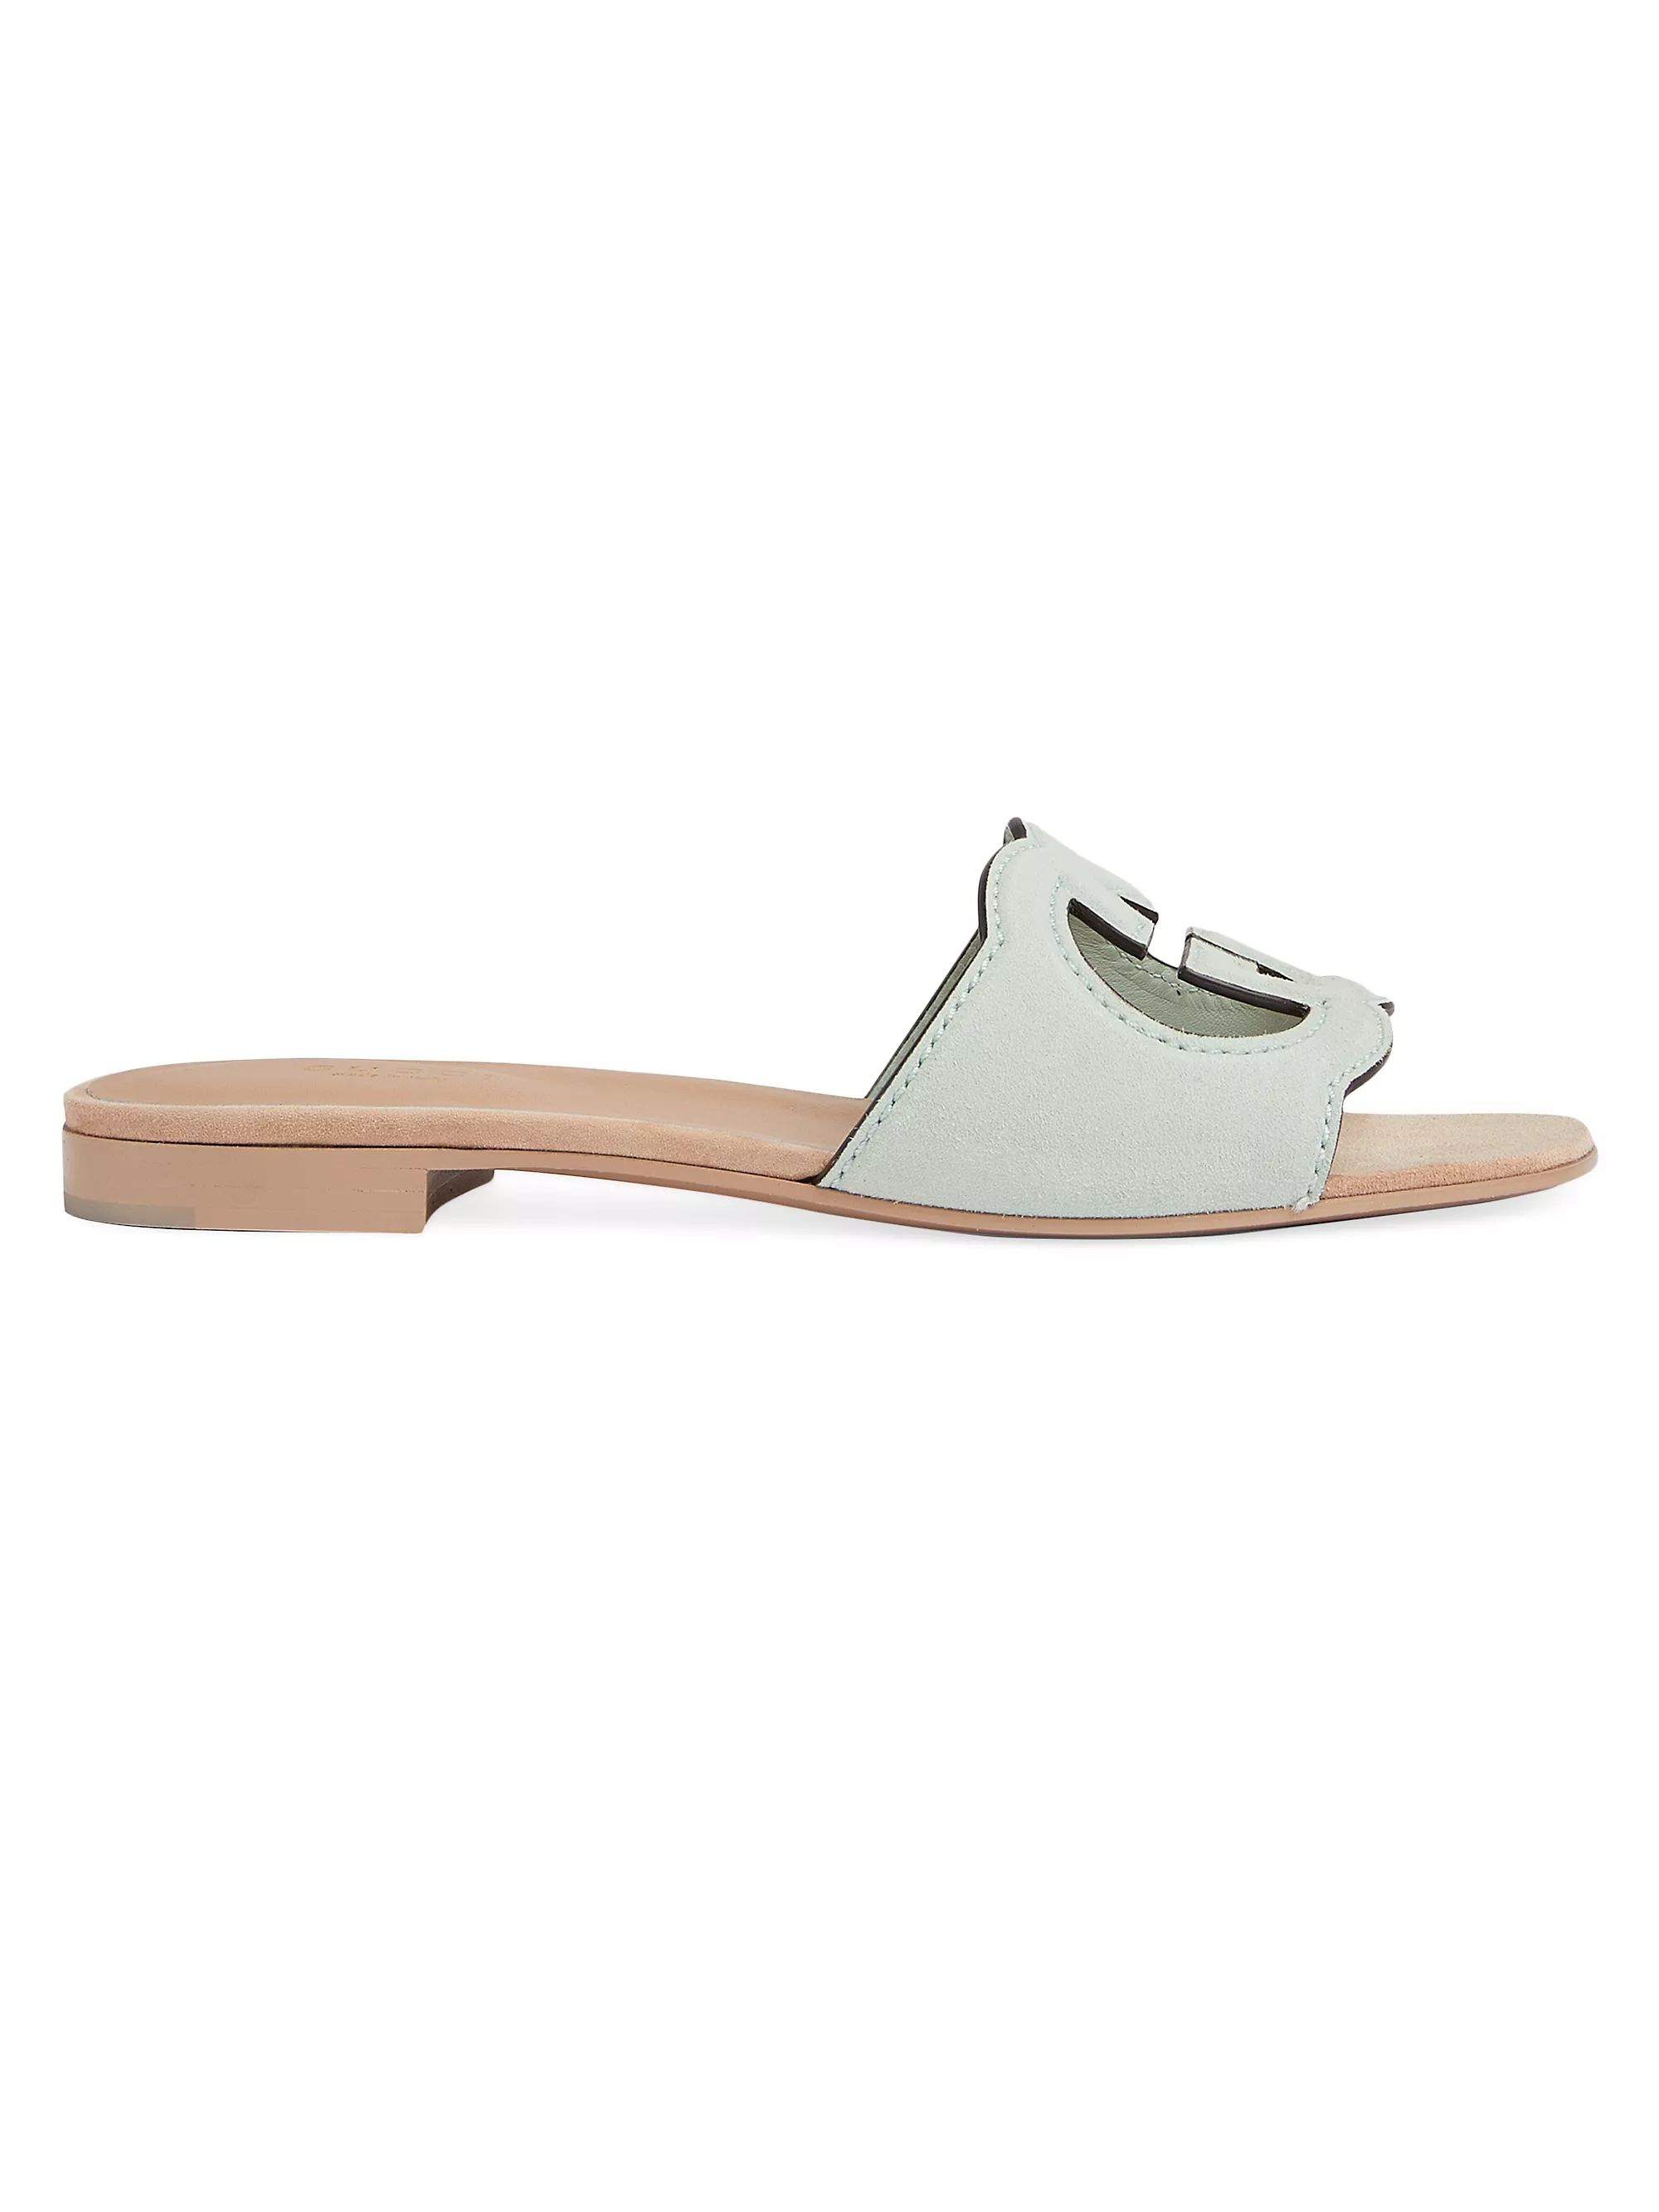 Shop Gucci Suede Slide Sandals | Saks Fifth Avenue | Saks Fifth Avenue